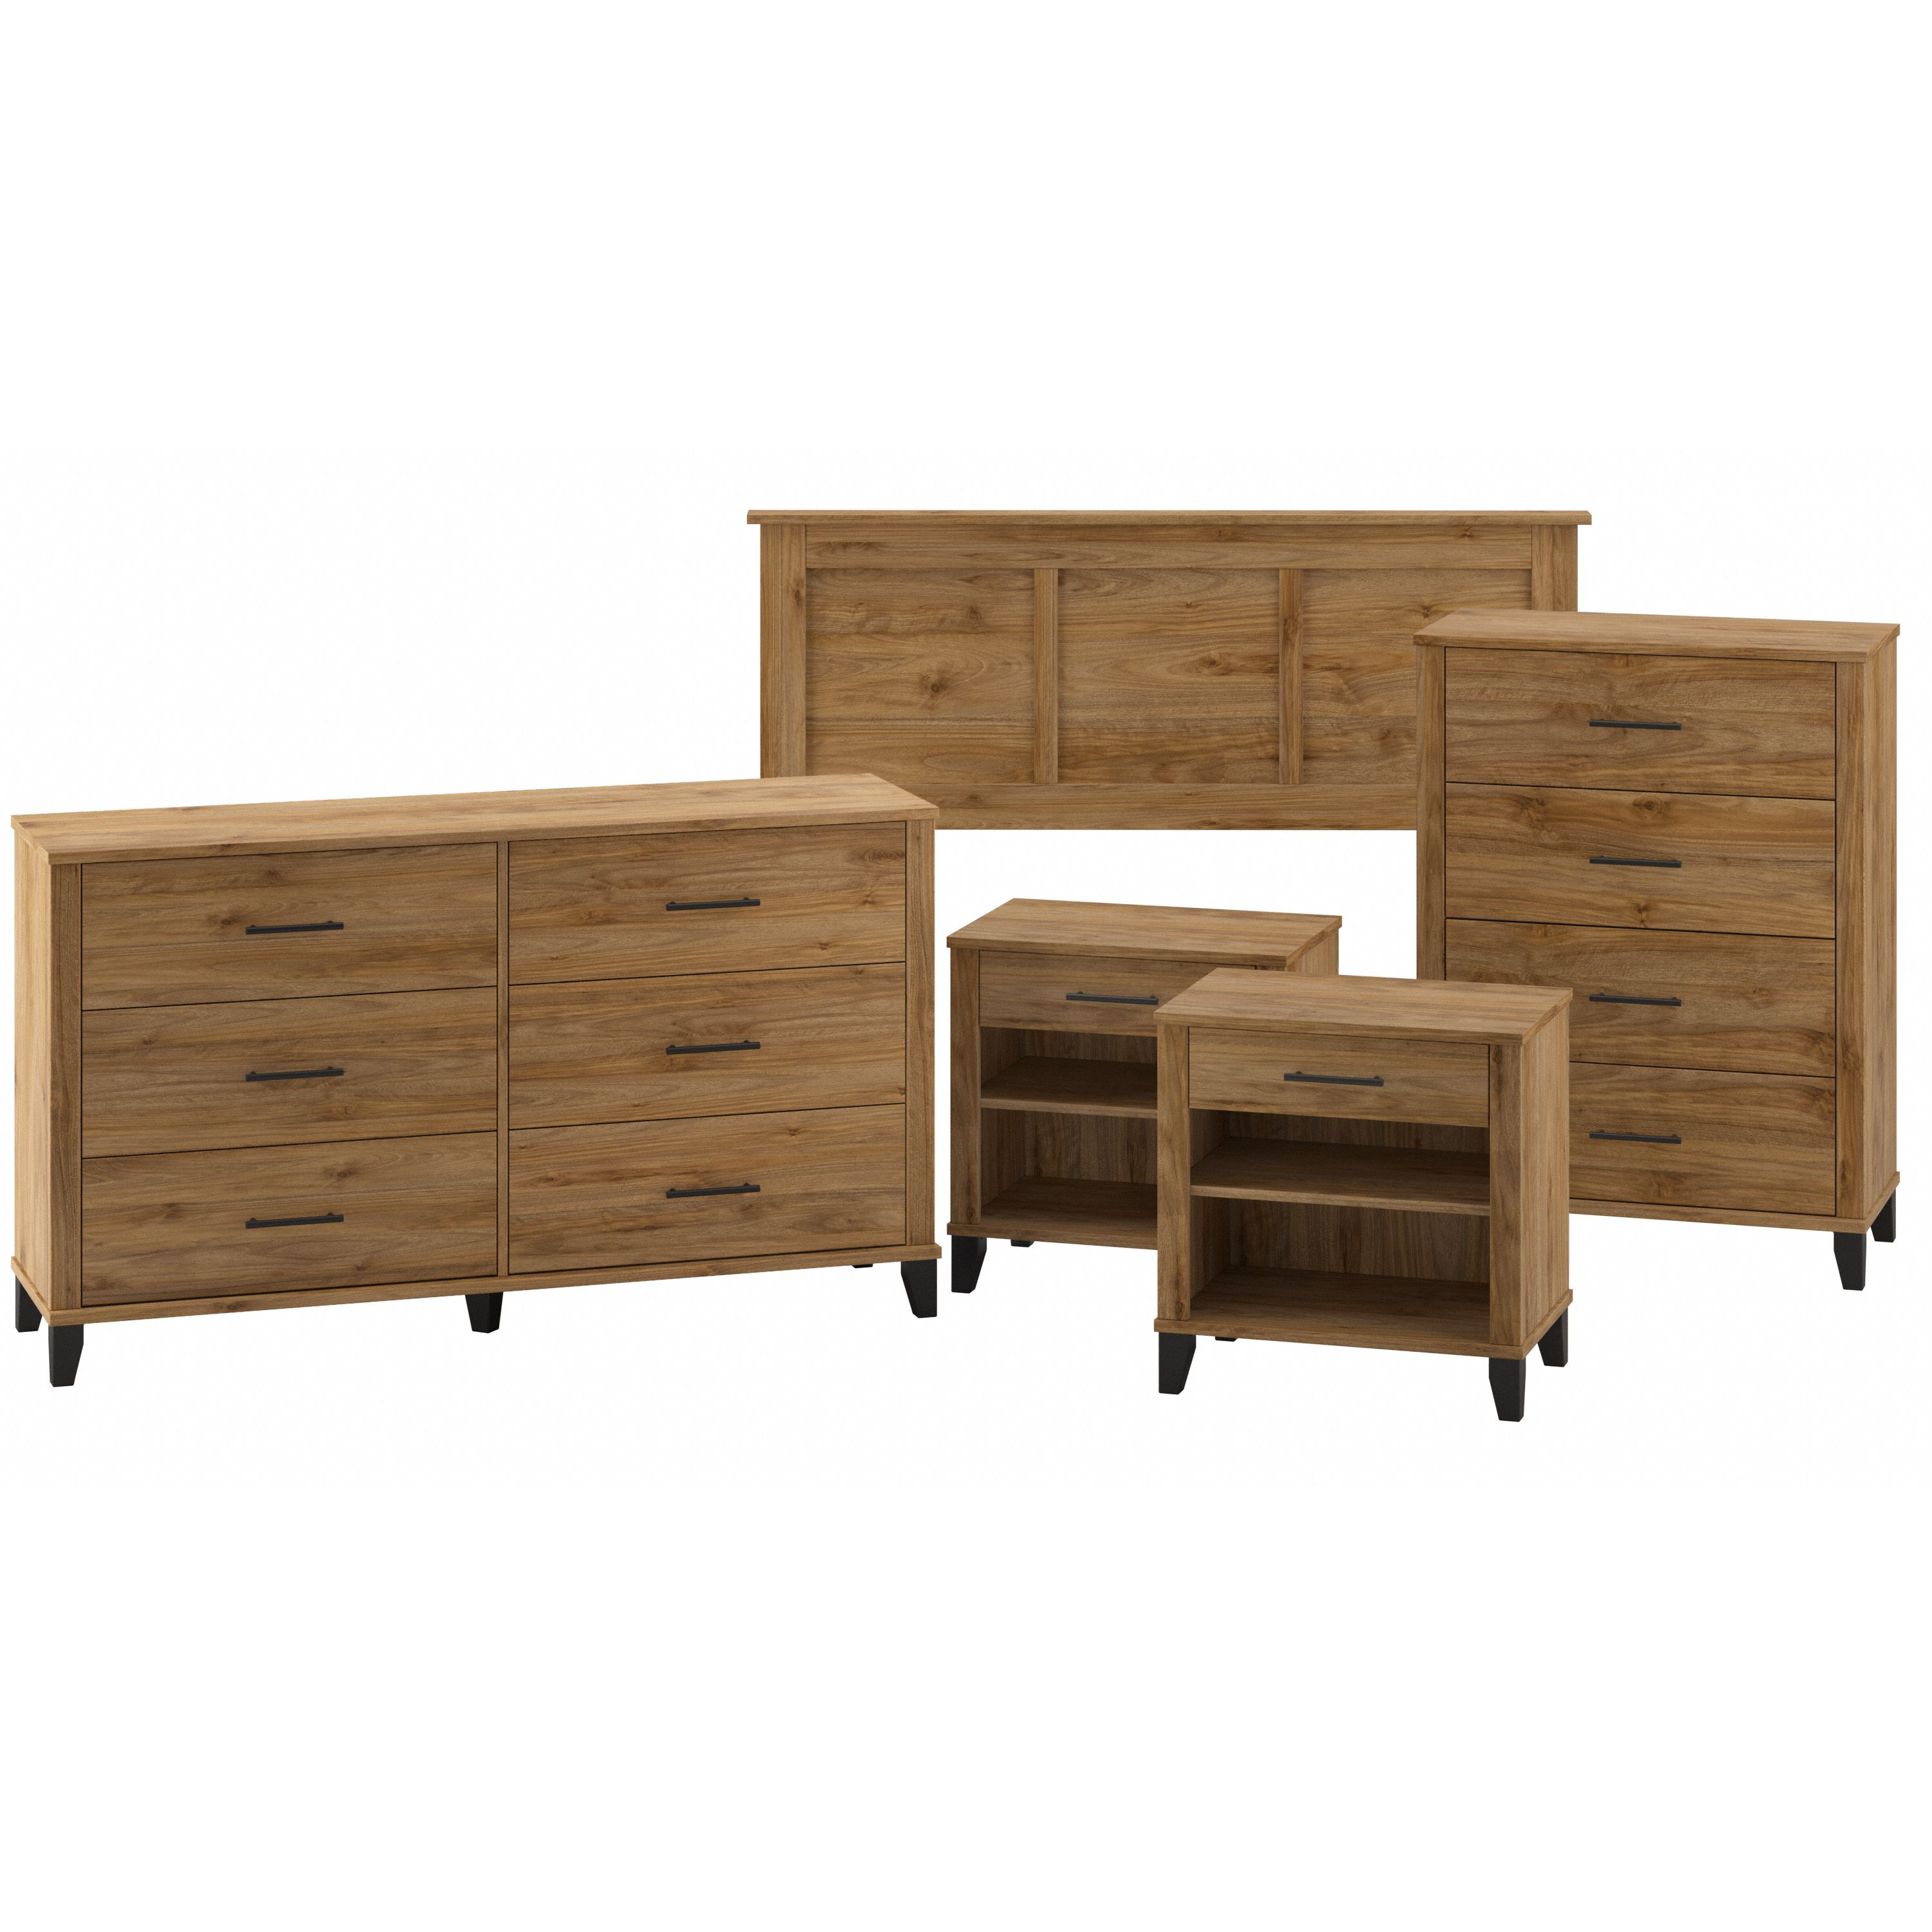 Shop Bush Furniture Somerset Full/Queen Size Headboard, Dressers and Nightstands Bedroom Set 02 SET036FW #color_fresh walnut